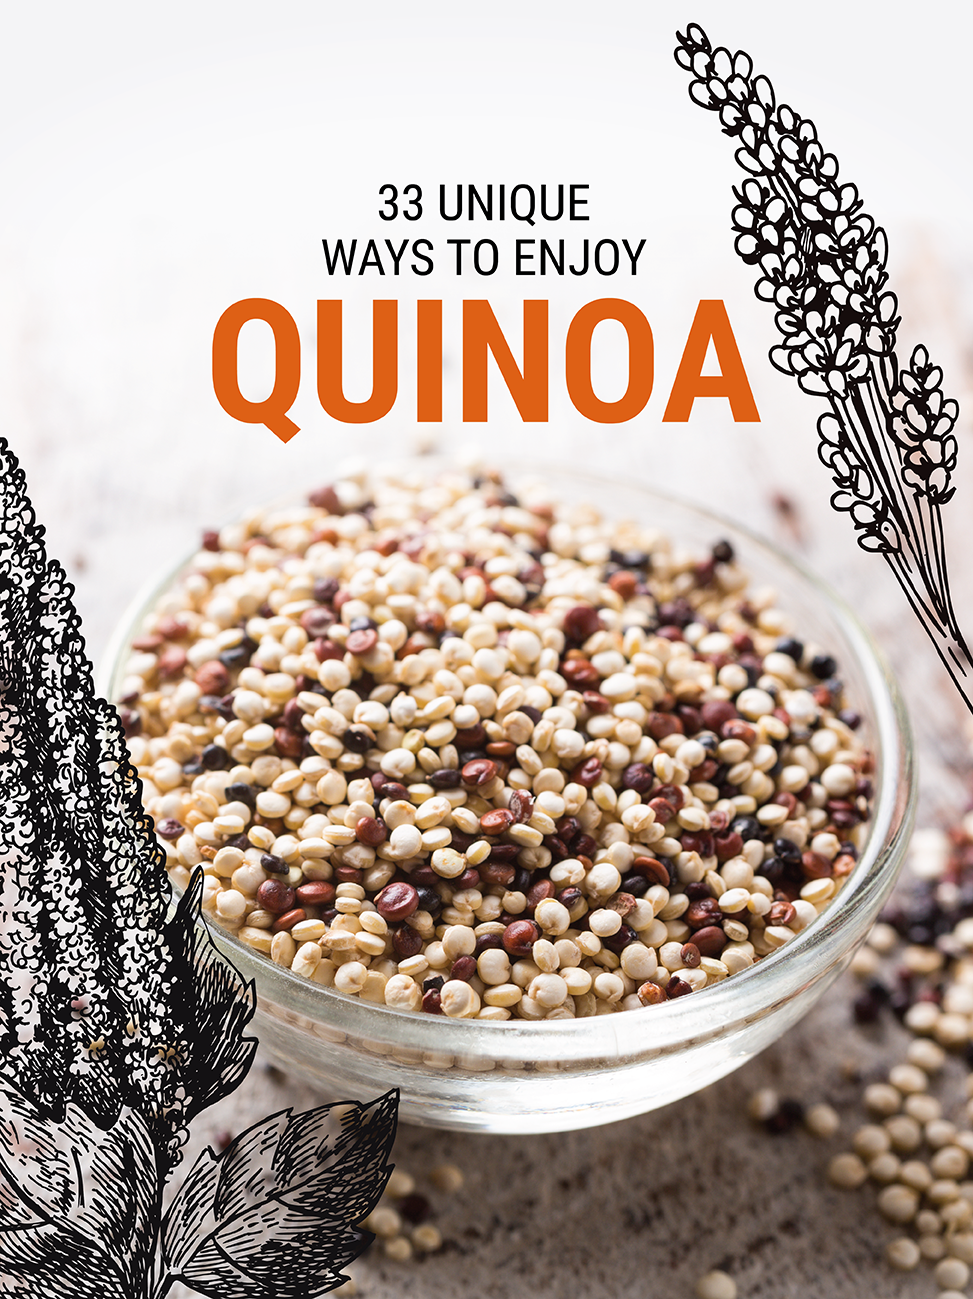 33 Unique Ways to Enjoy Quinoa